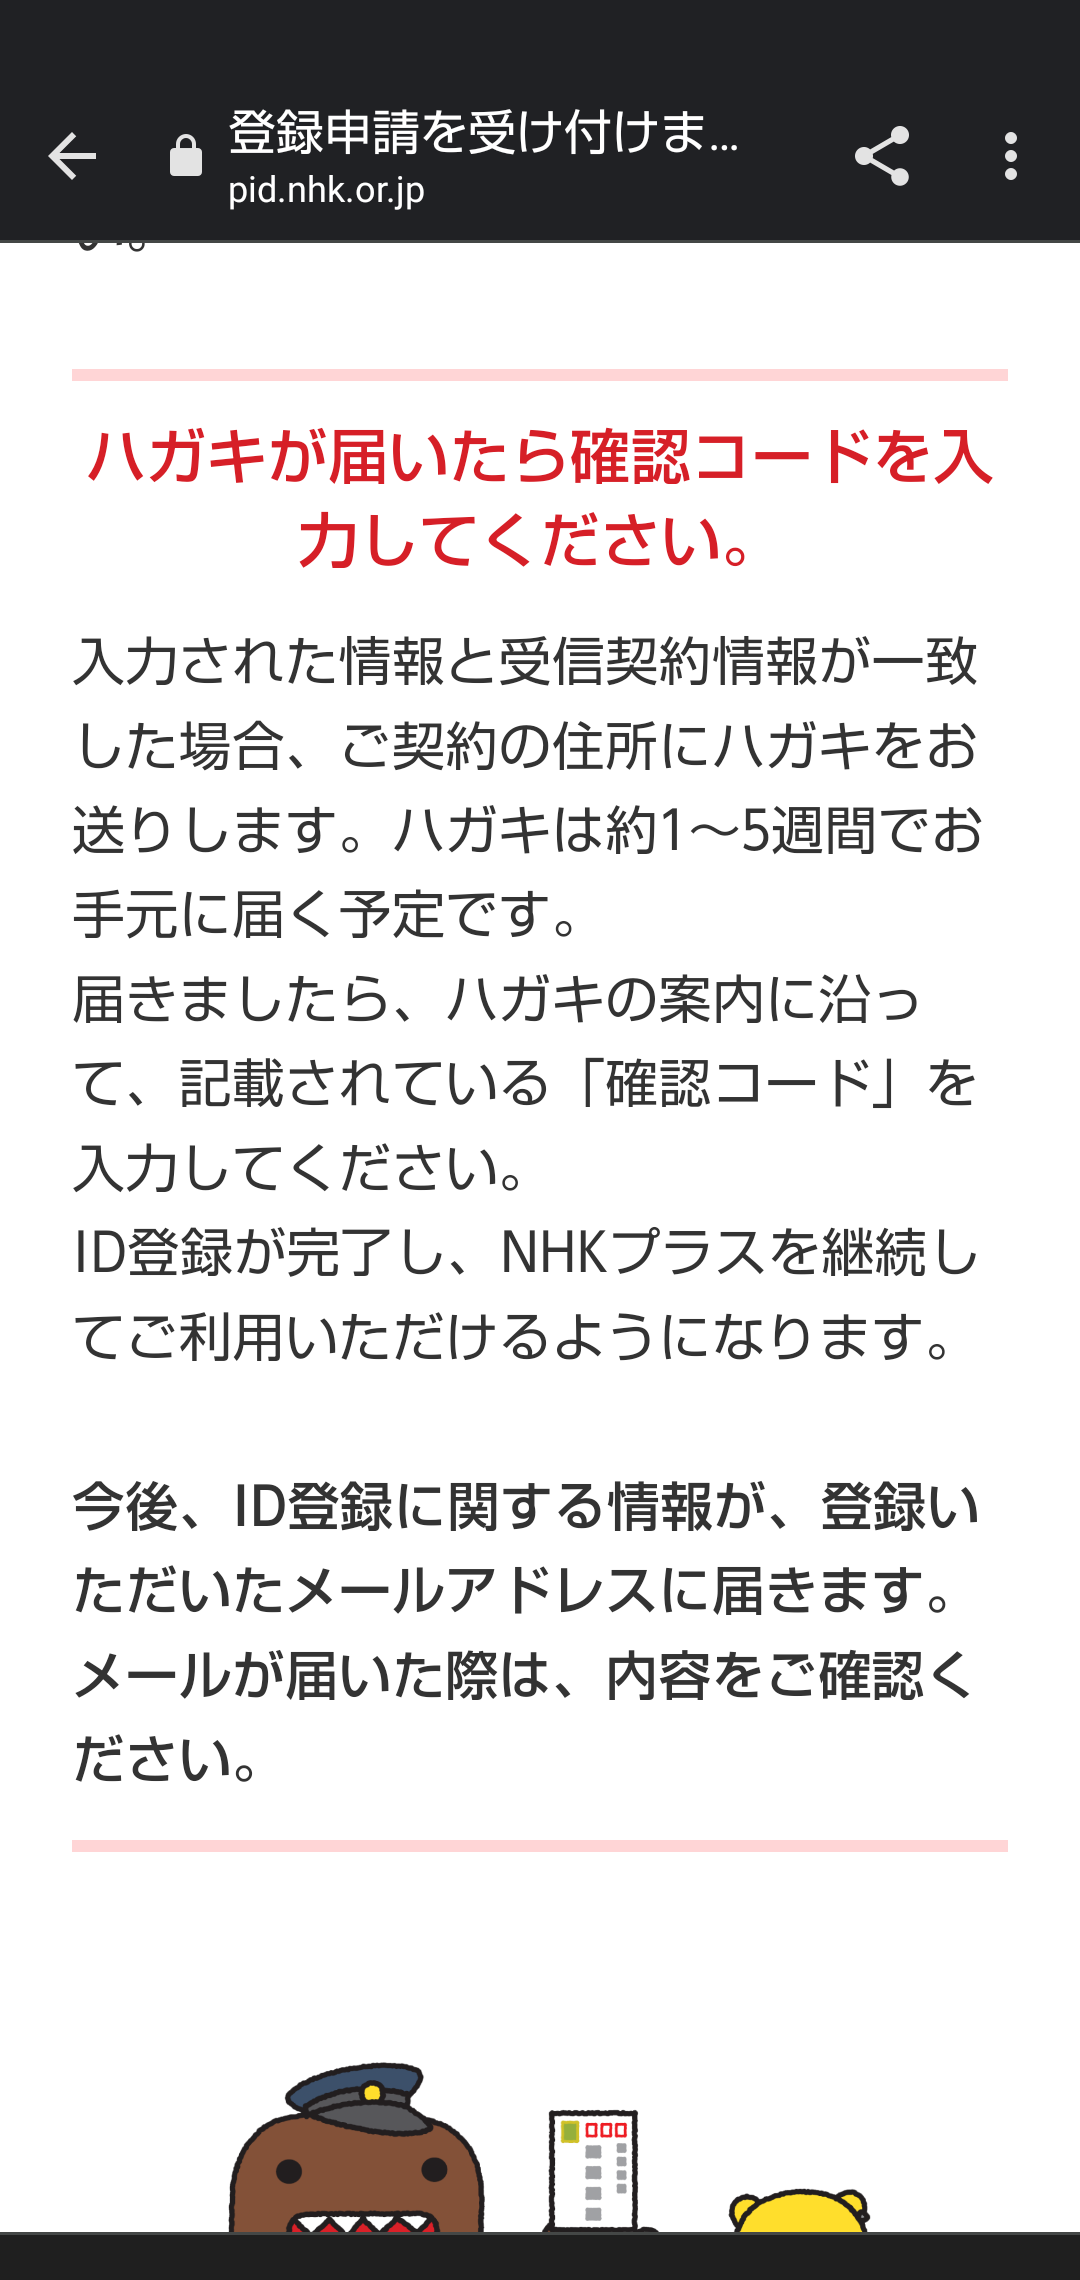 NHK登録画面18